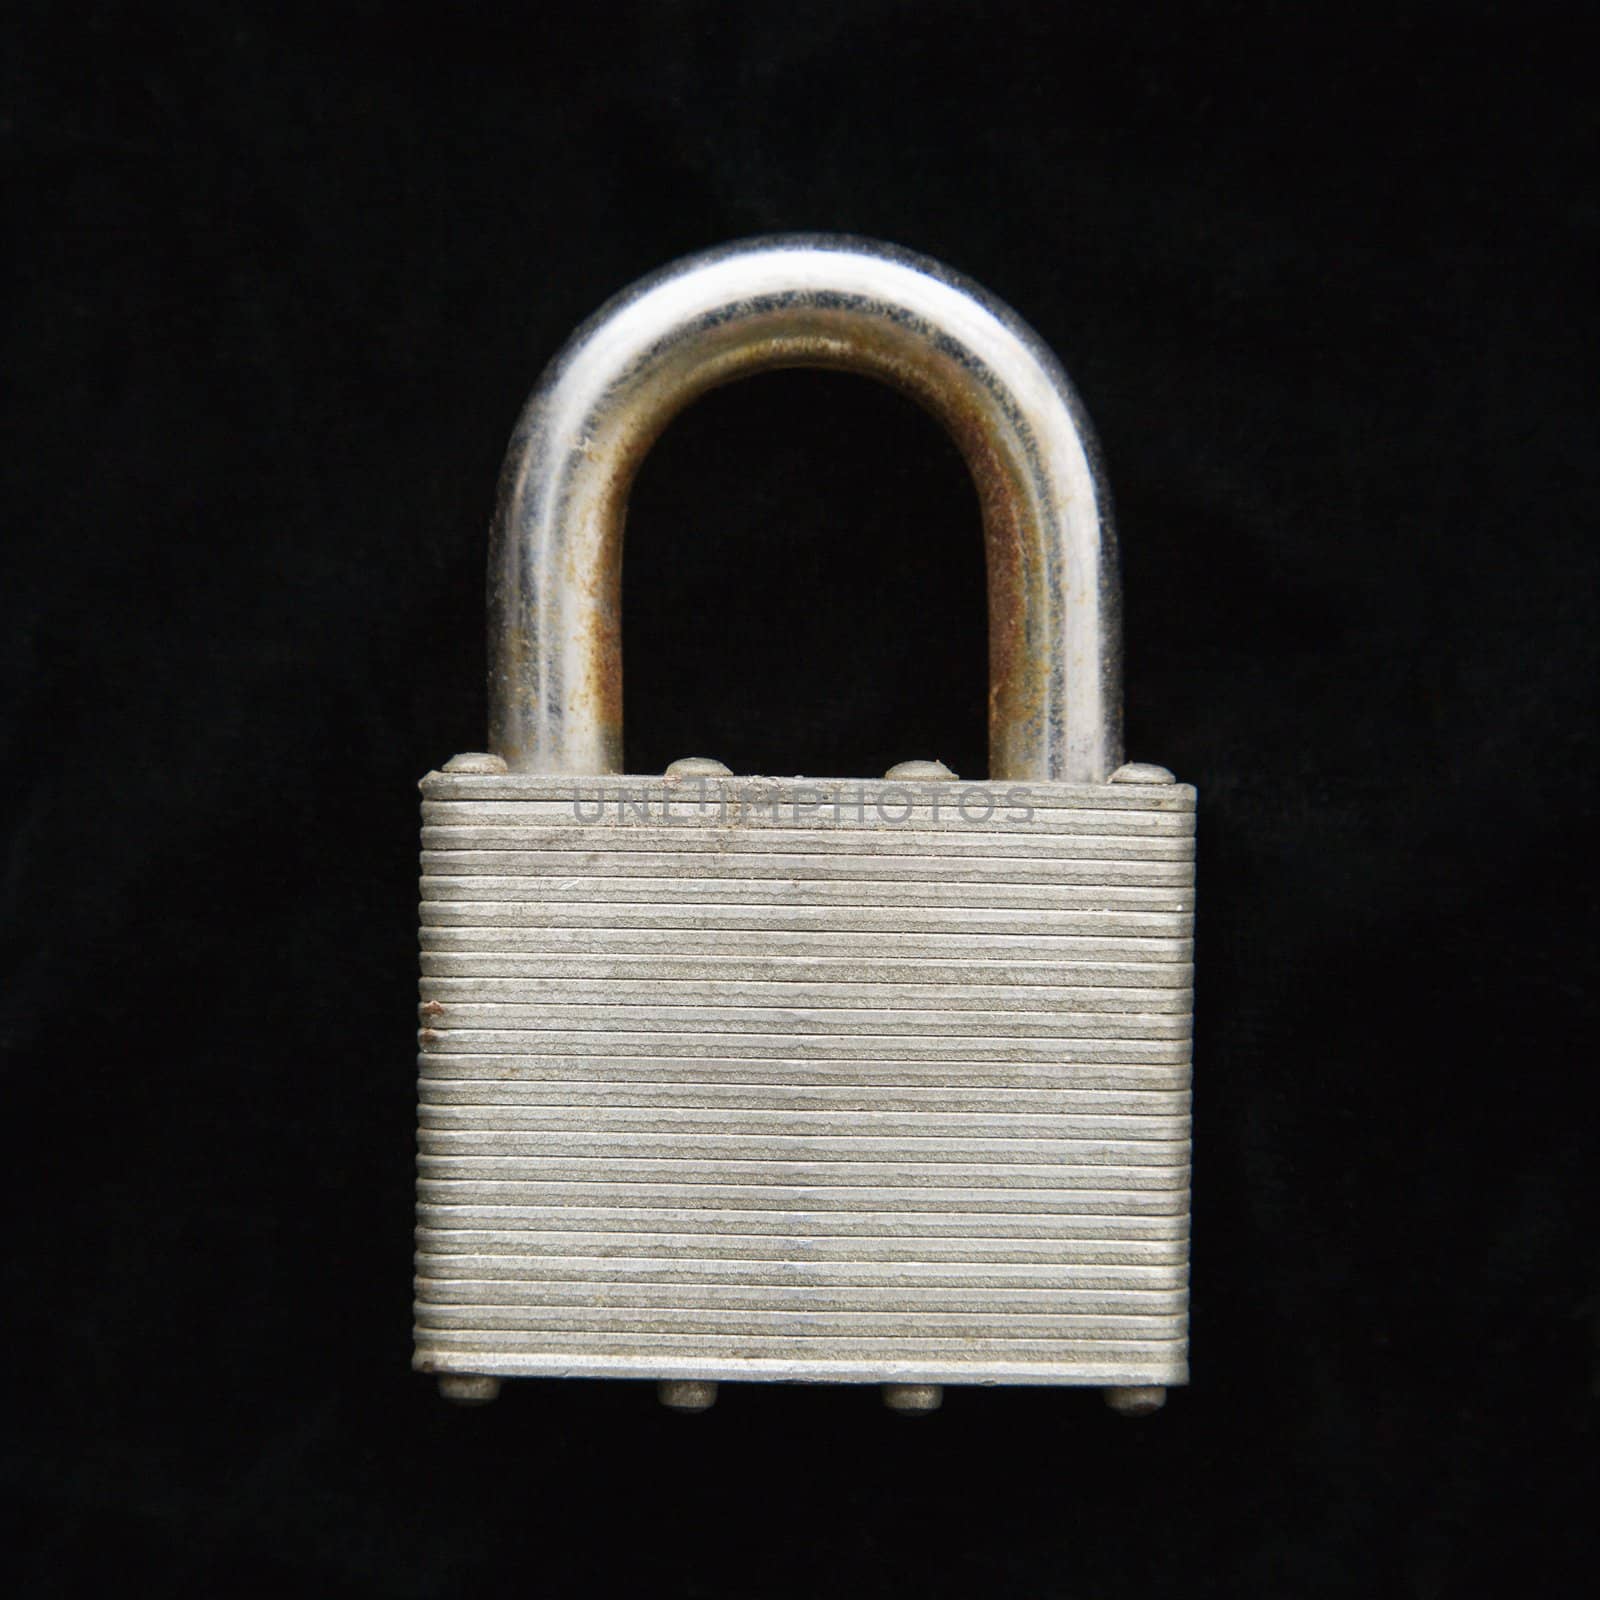 Metal locked padlock.